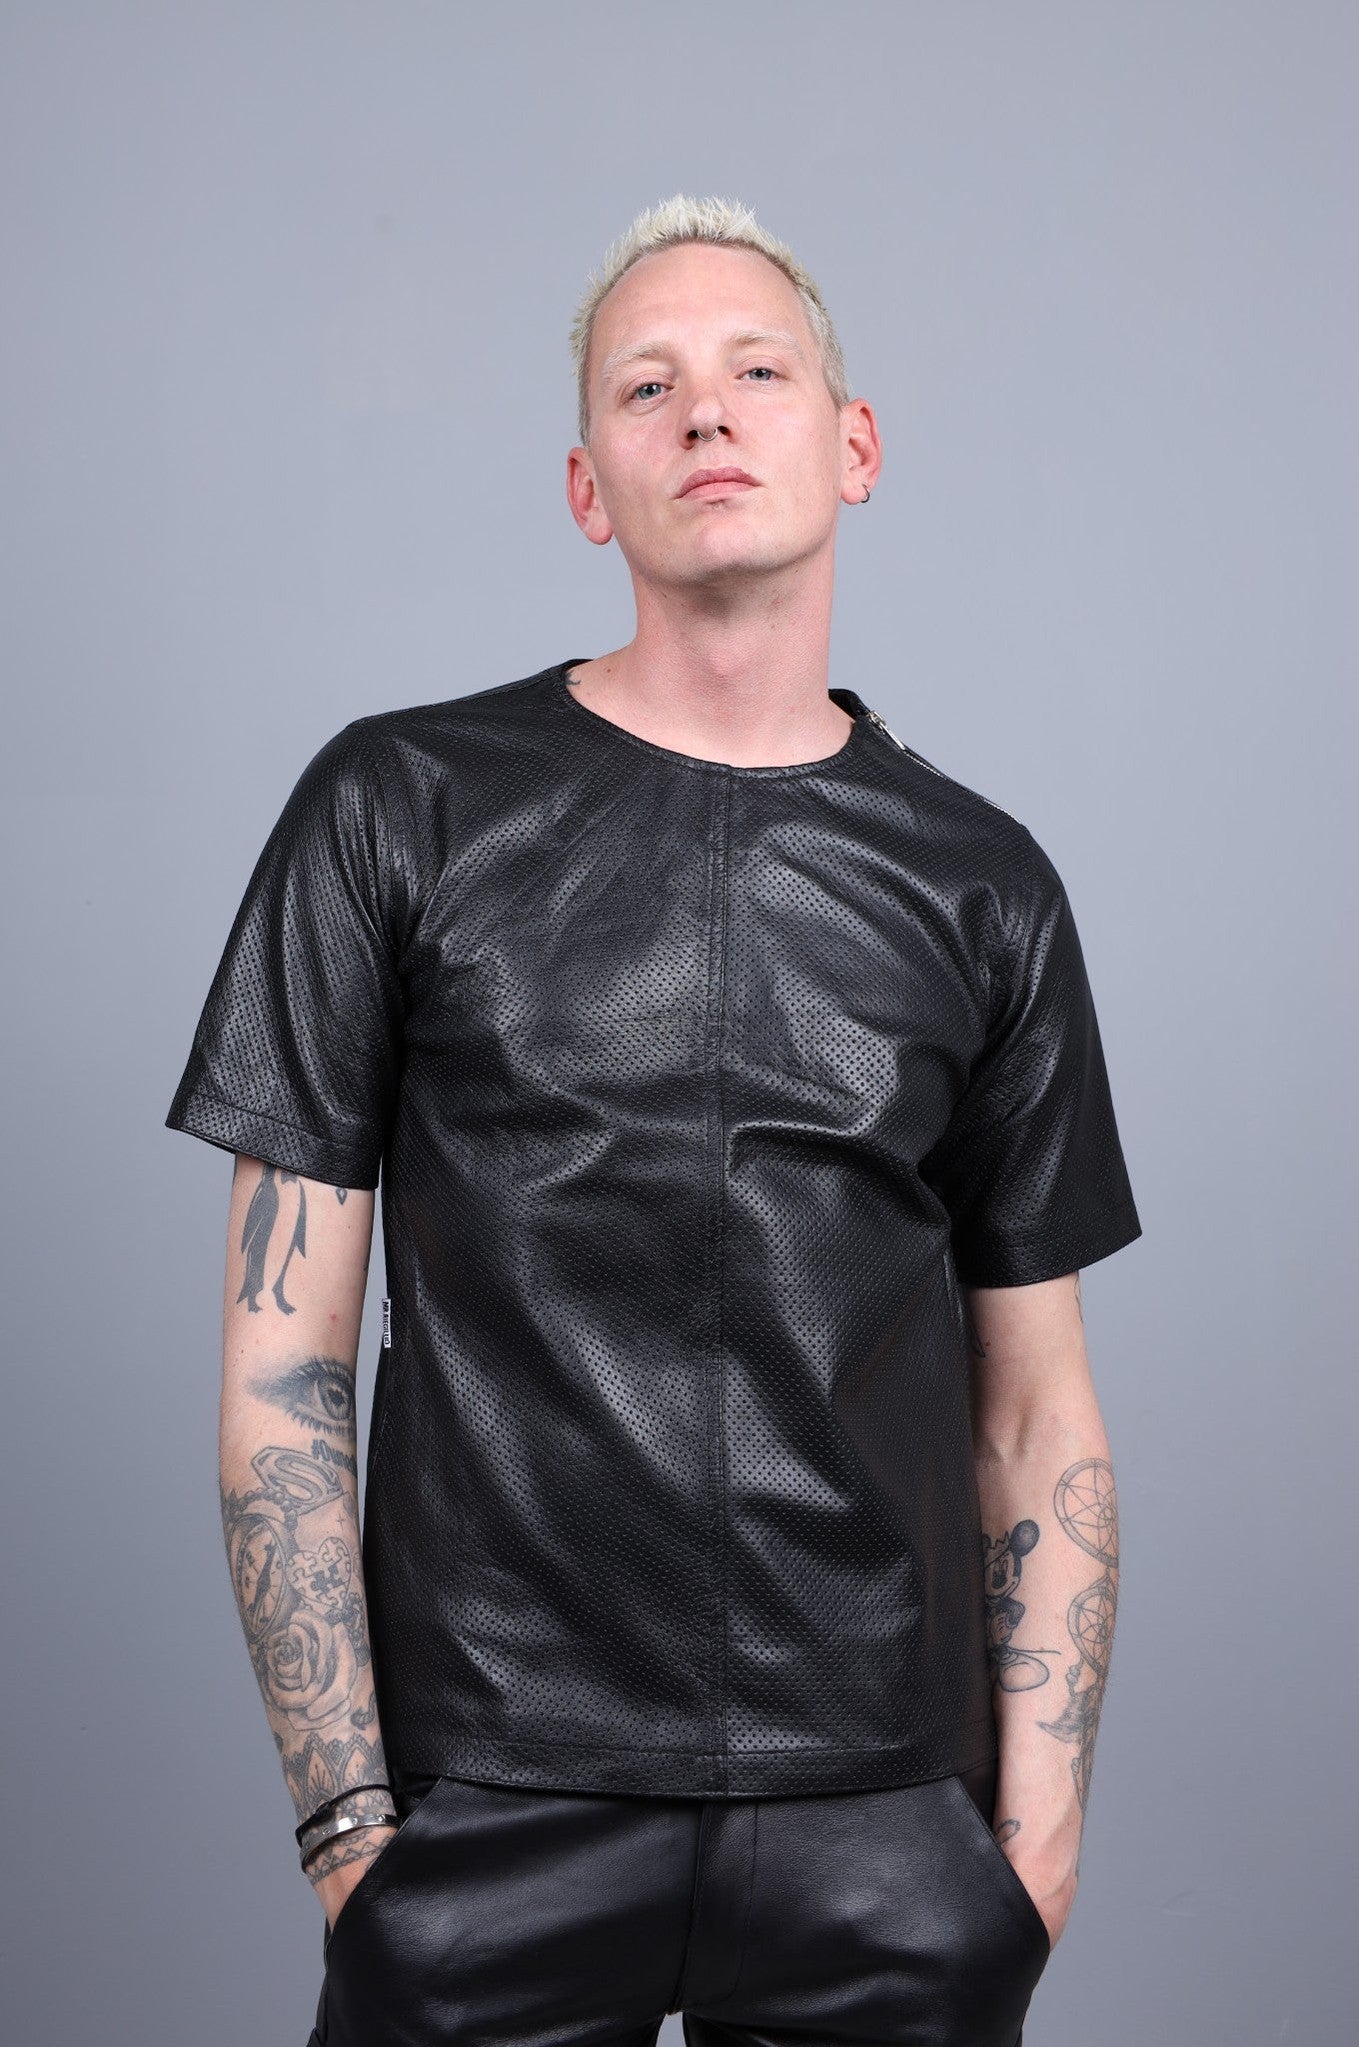 Black Leather Perforated T-Shirt at MR. Riegillio